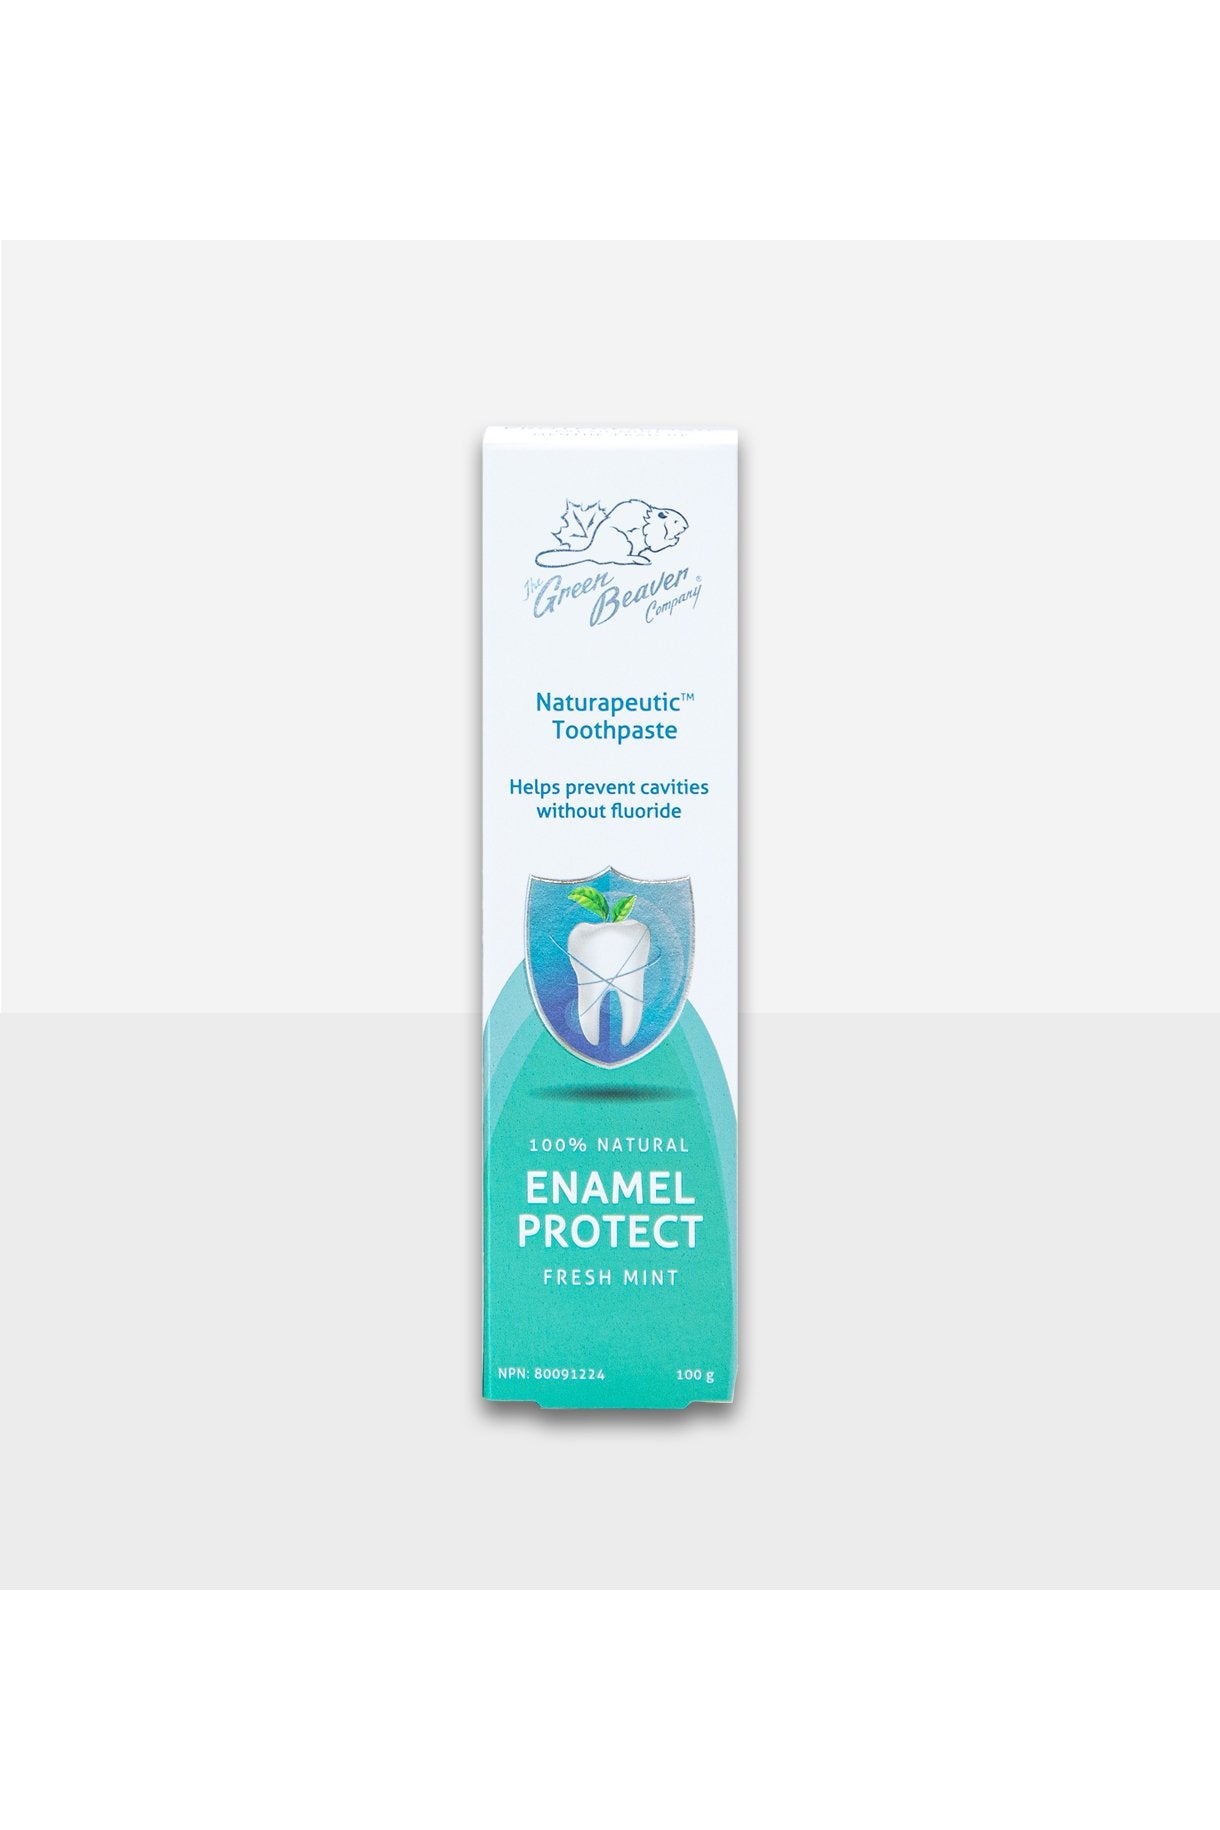 Green Beaver Naturapeutic Enamel Protect Toothpaste - Fresh Mint Flavour 100g